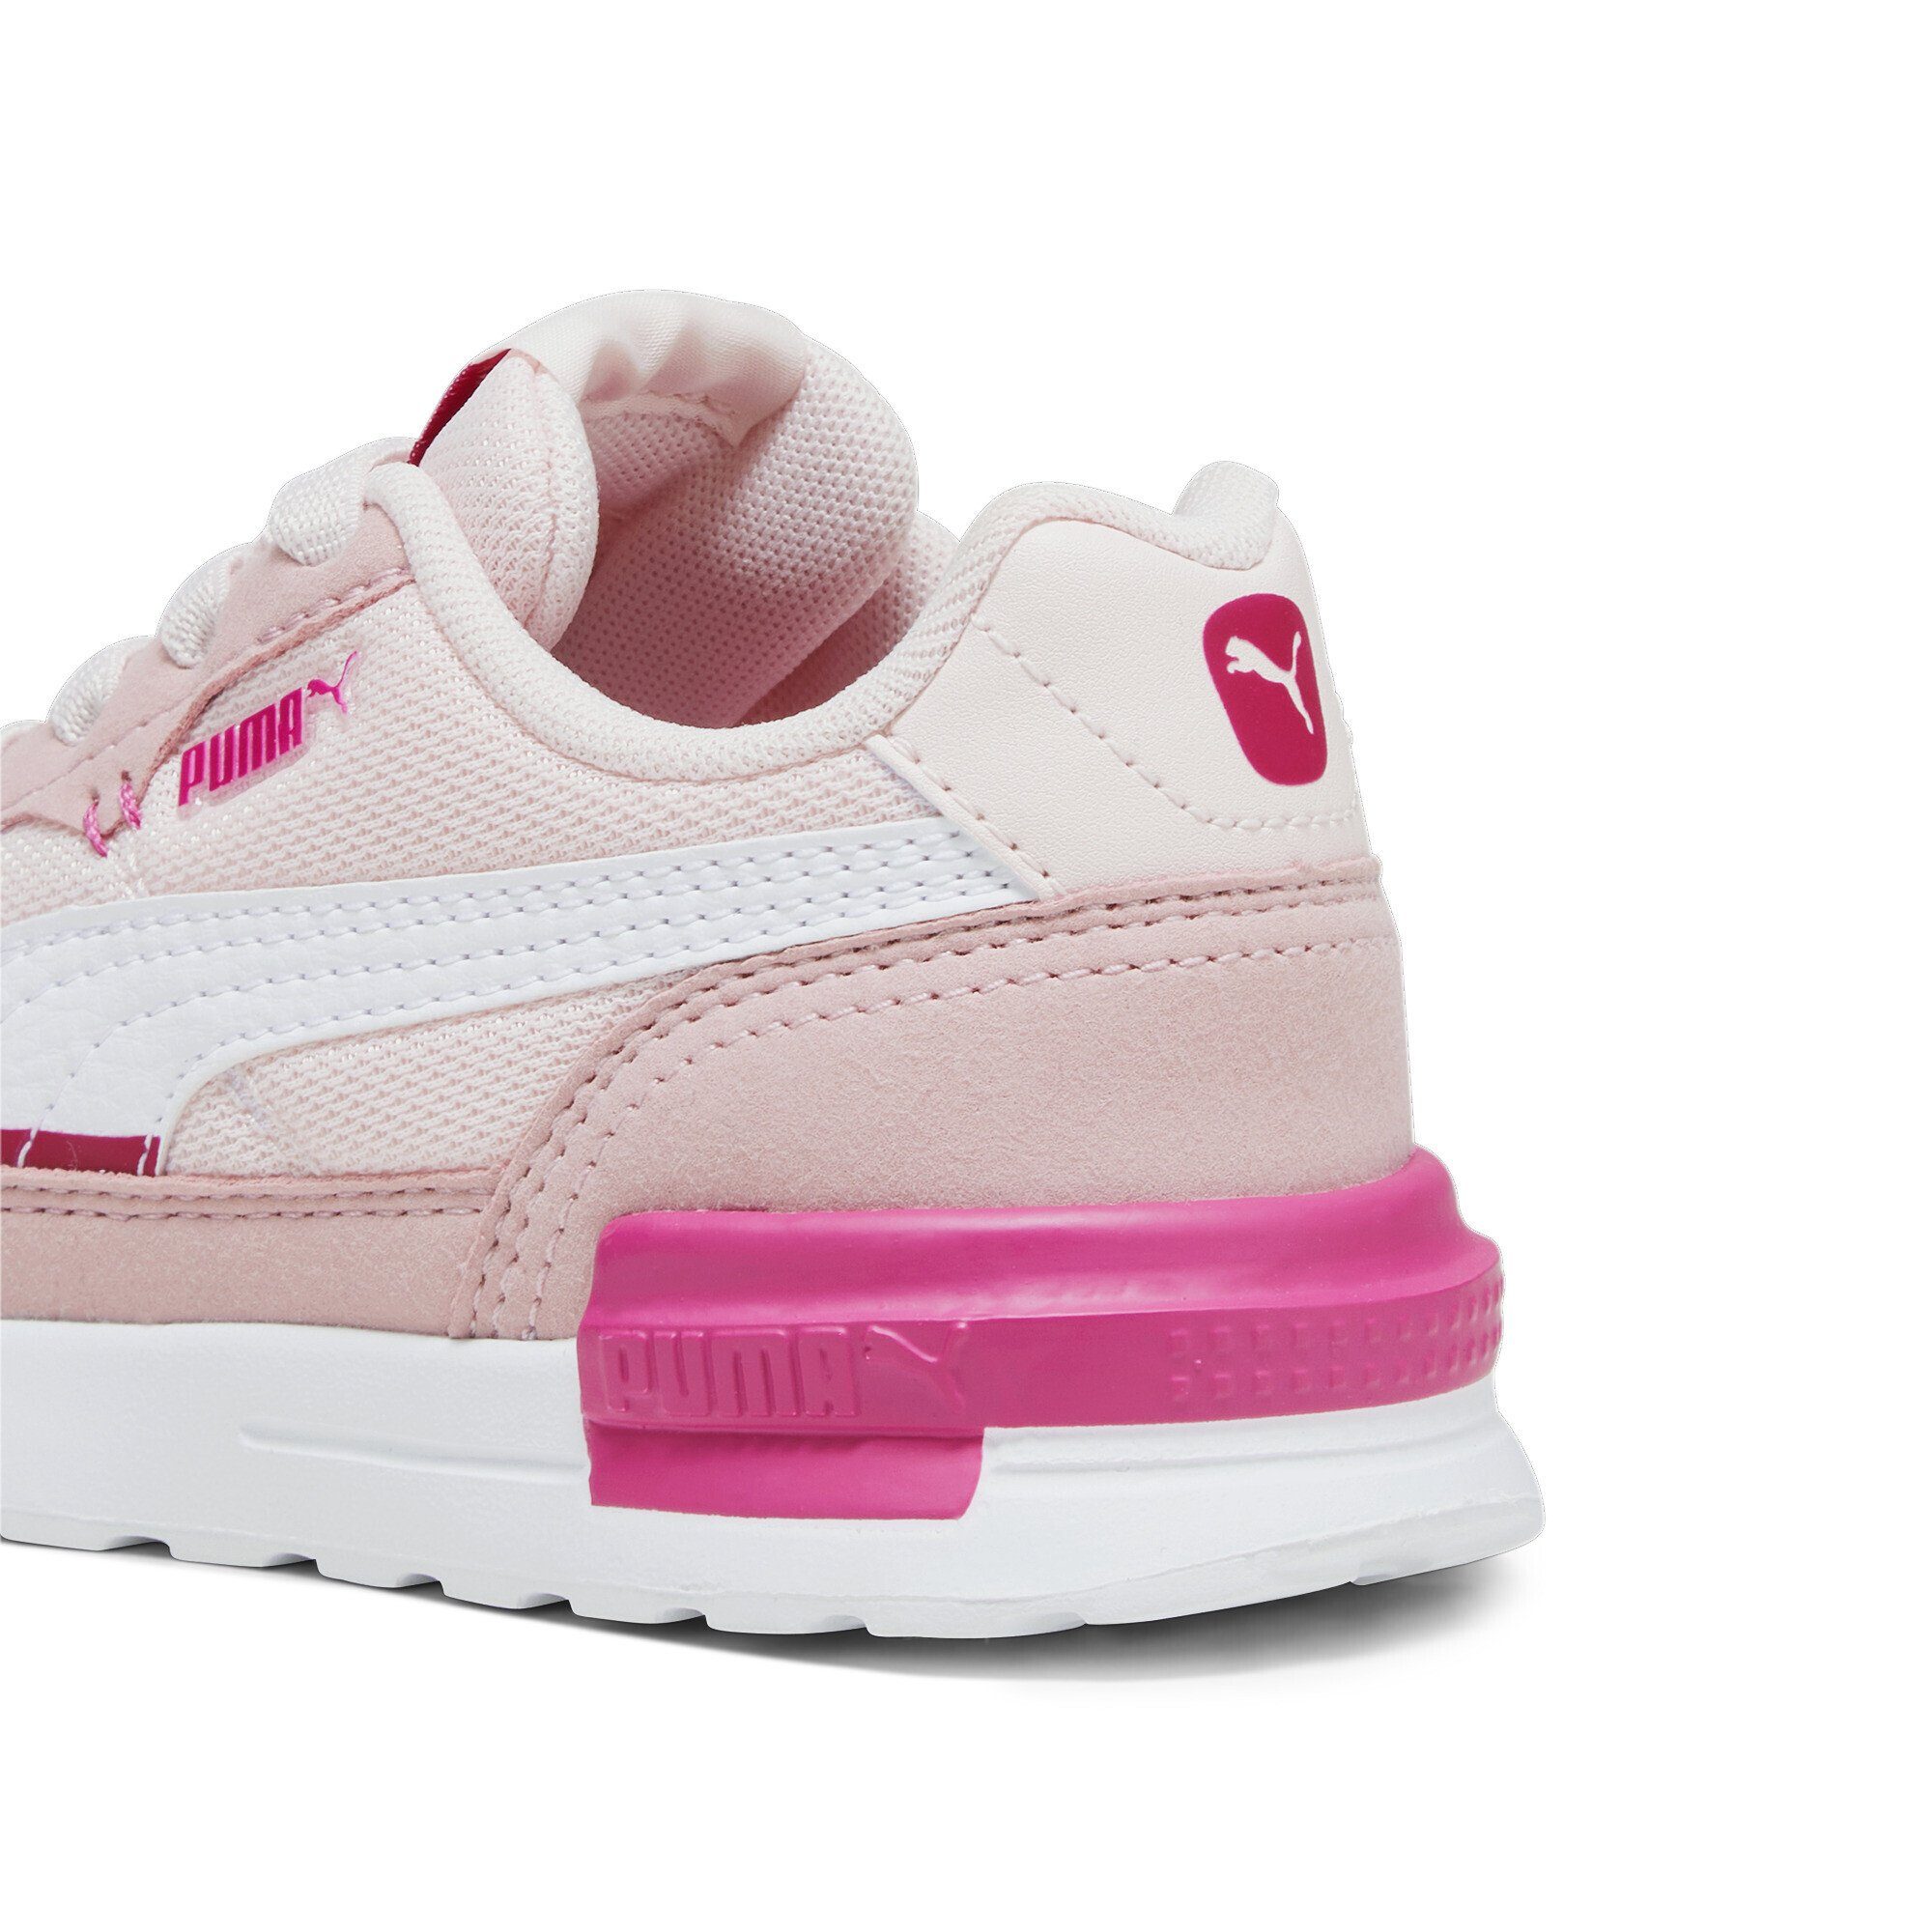 PUMA Graviton AC Sneaker Jugendliche Sneaker Pink White Frosty Pinktastic Future